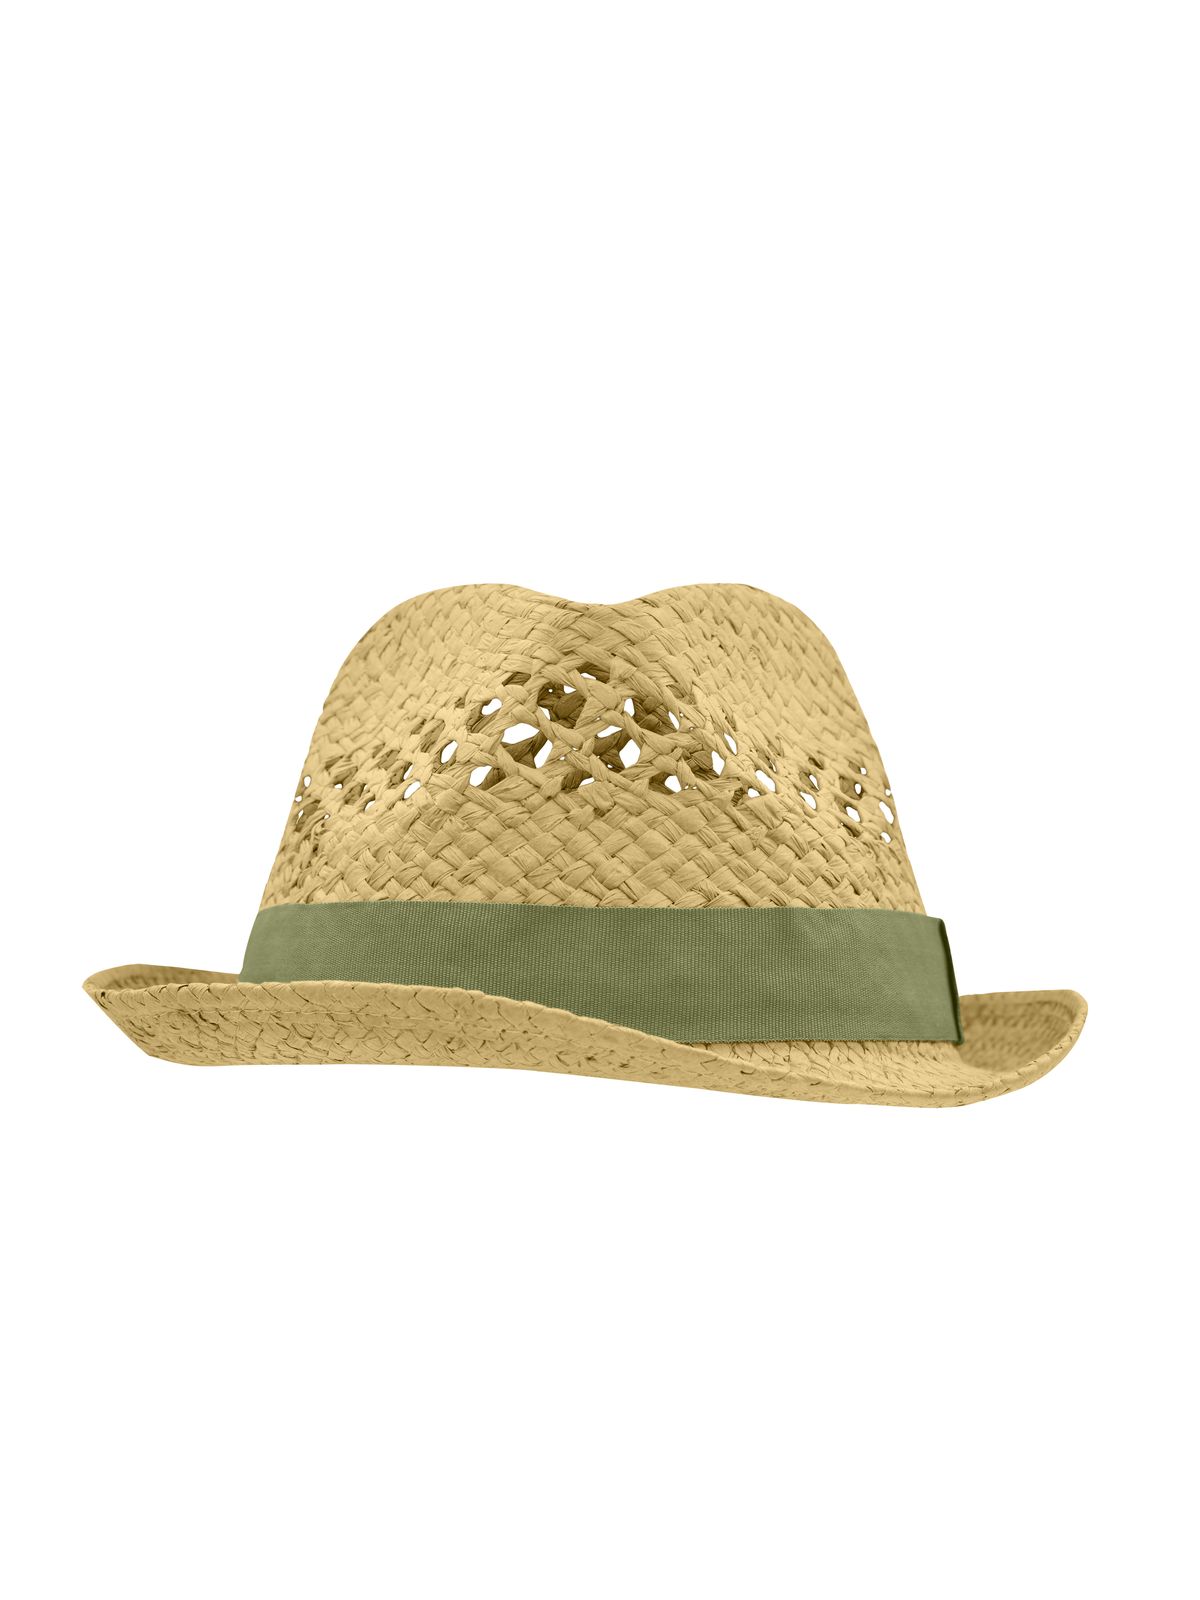 summer-style-hat-straw-olive.webp